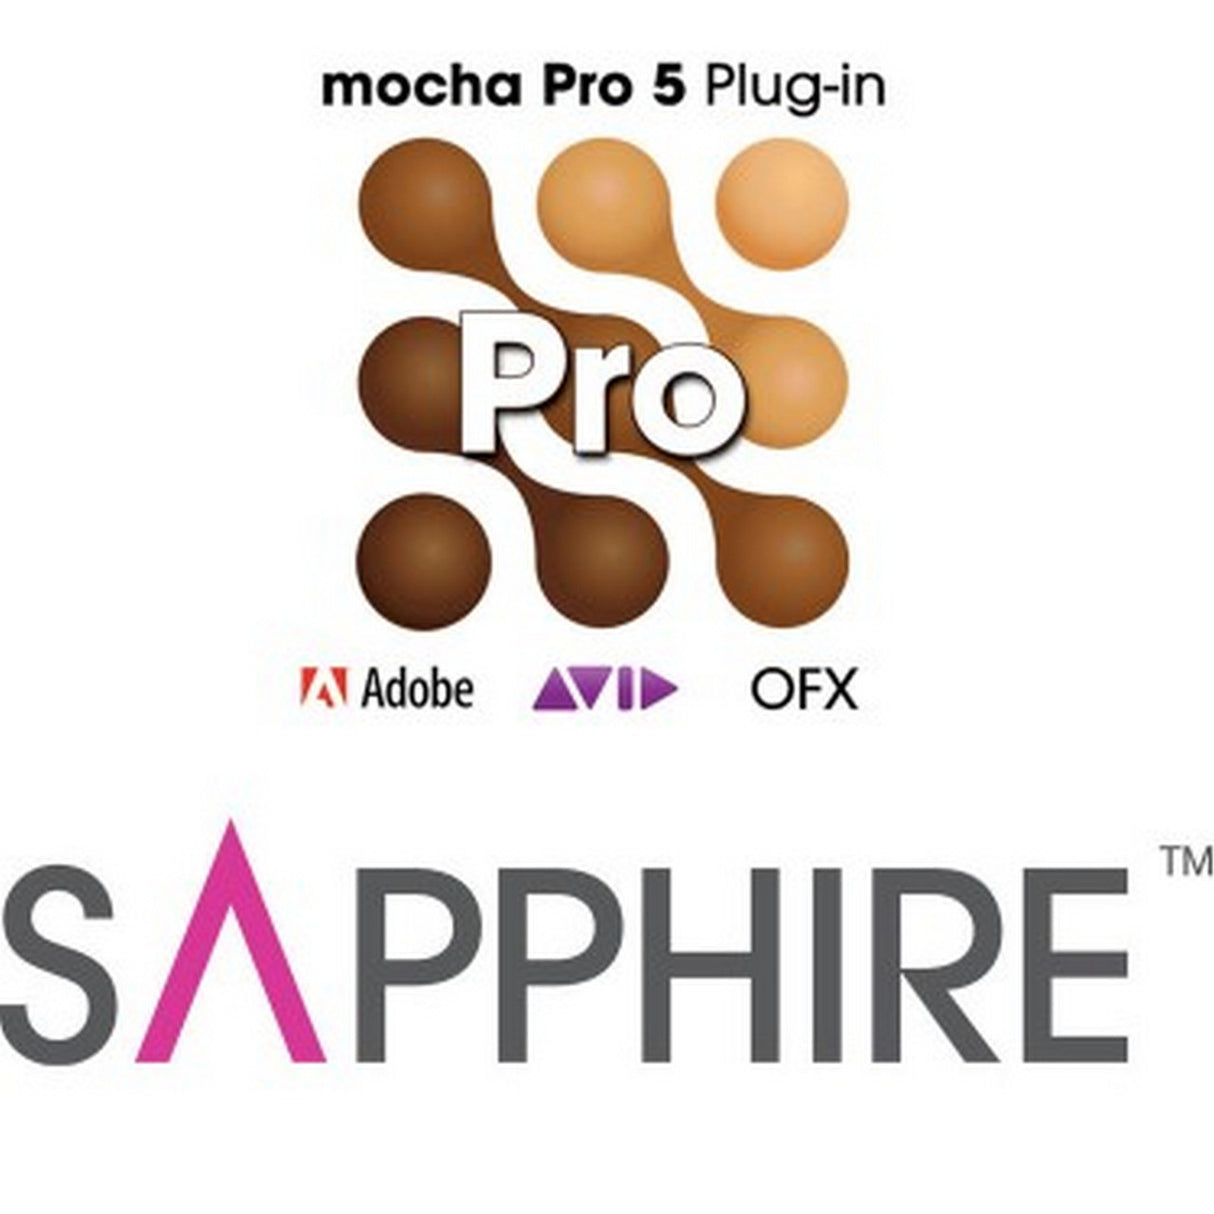 GenArts Sapphire 10 and mocha Pro 5 Bundle | Video Software Adobe Avid and OFX